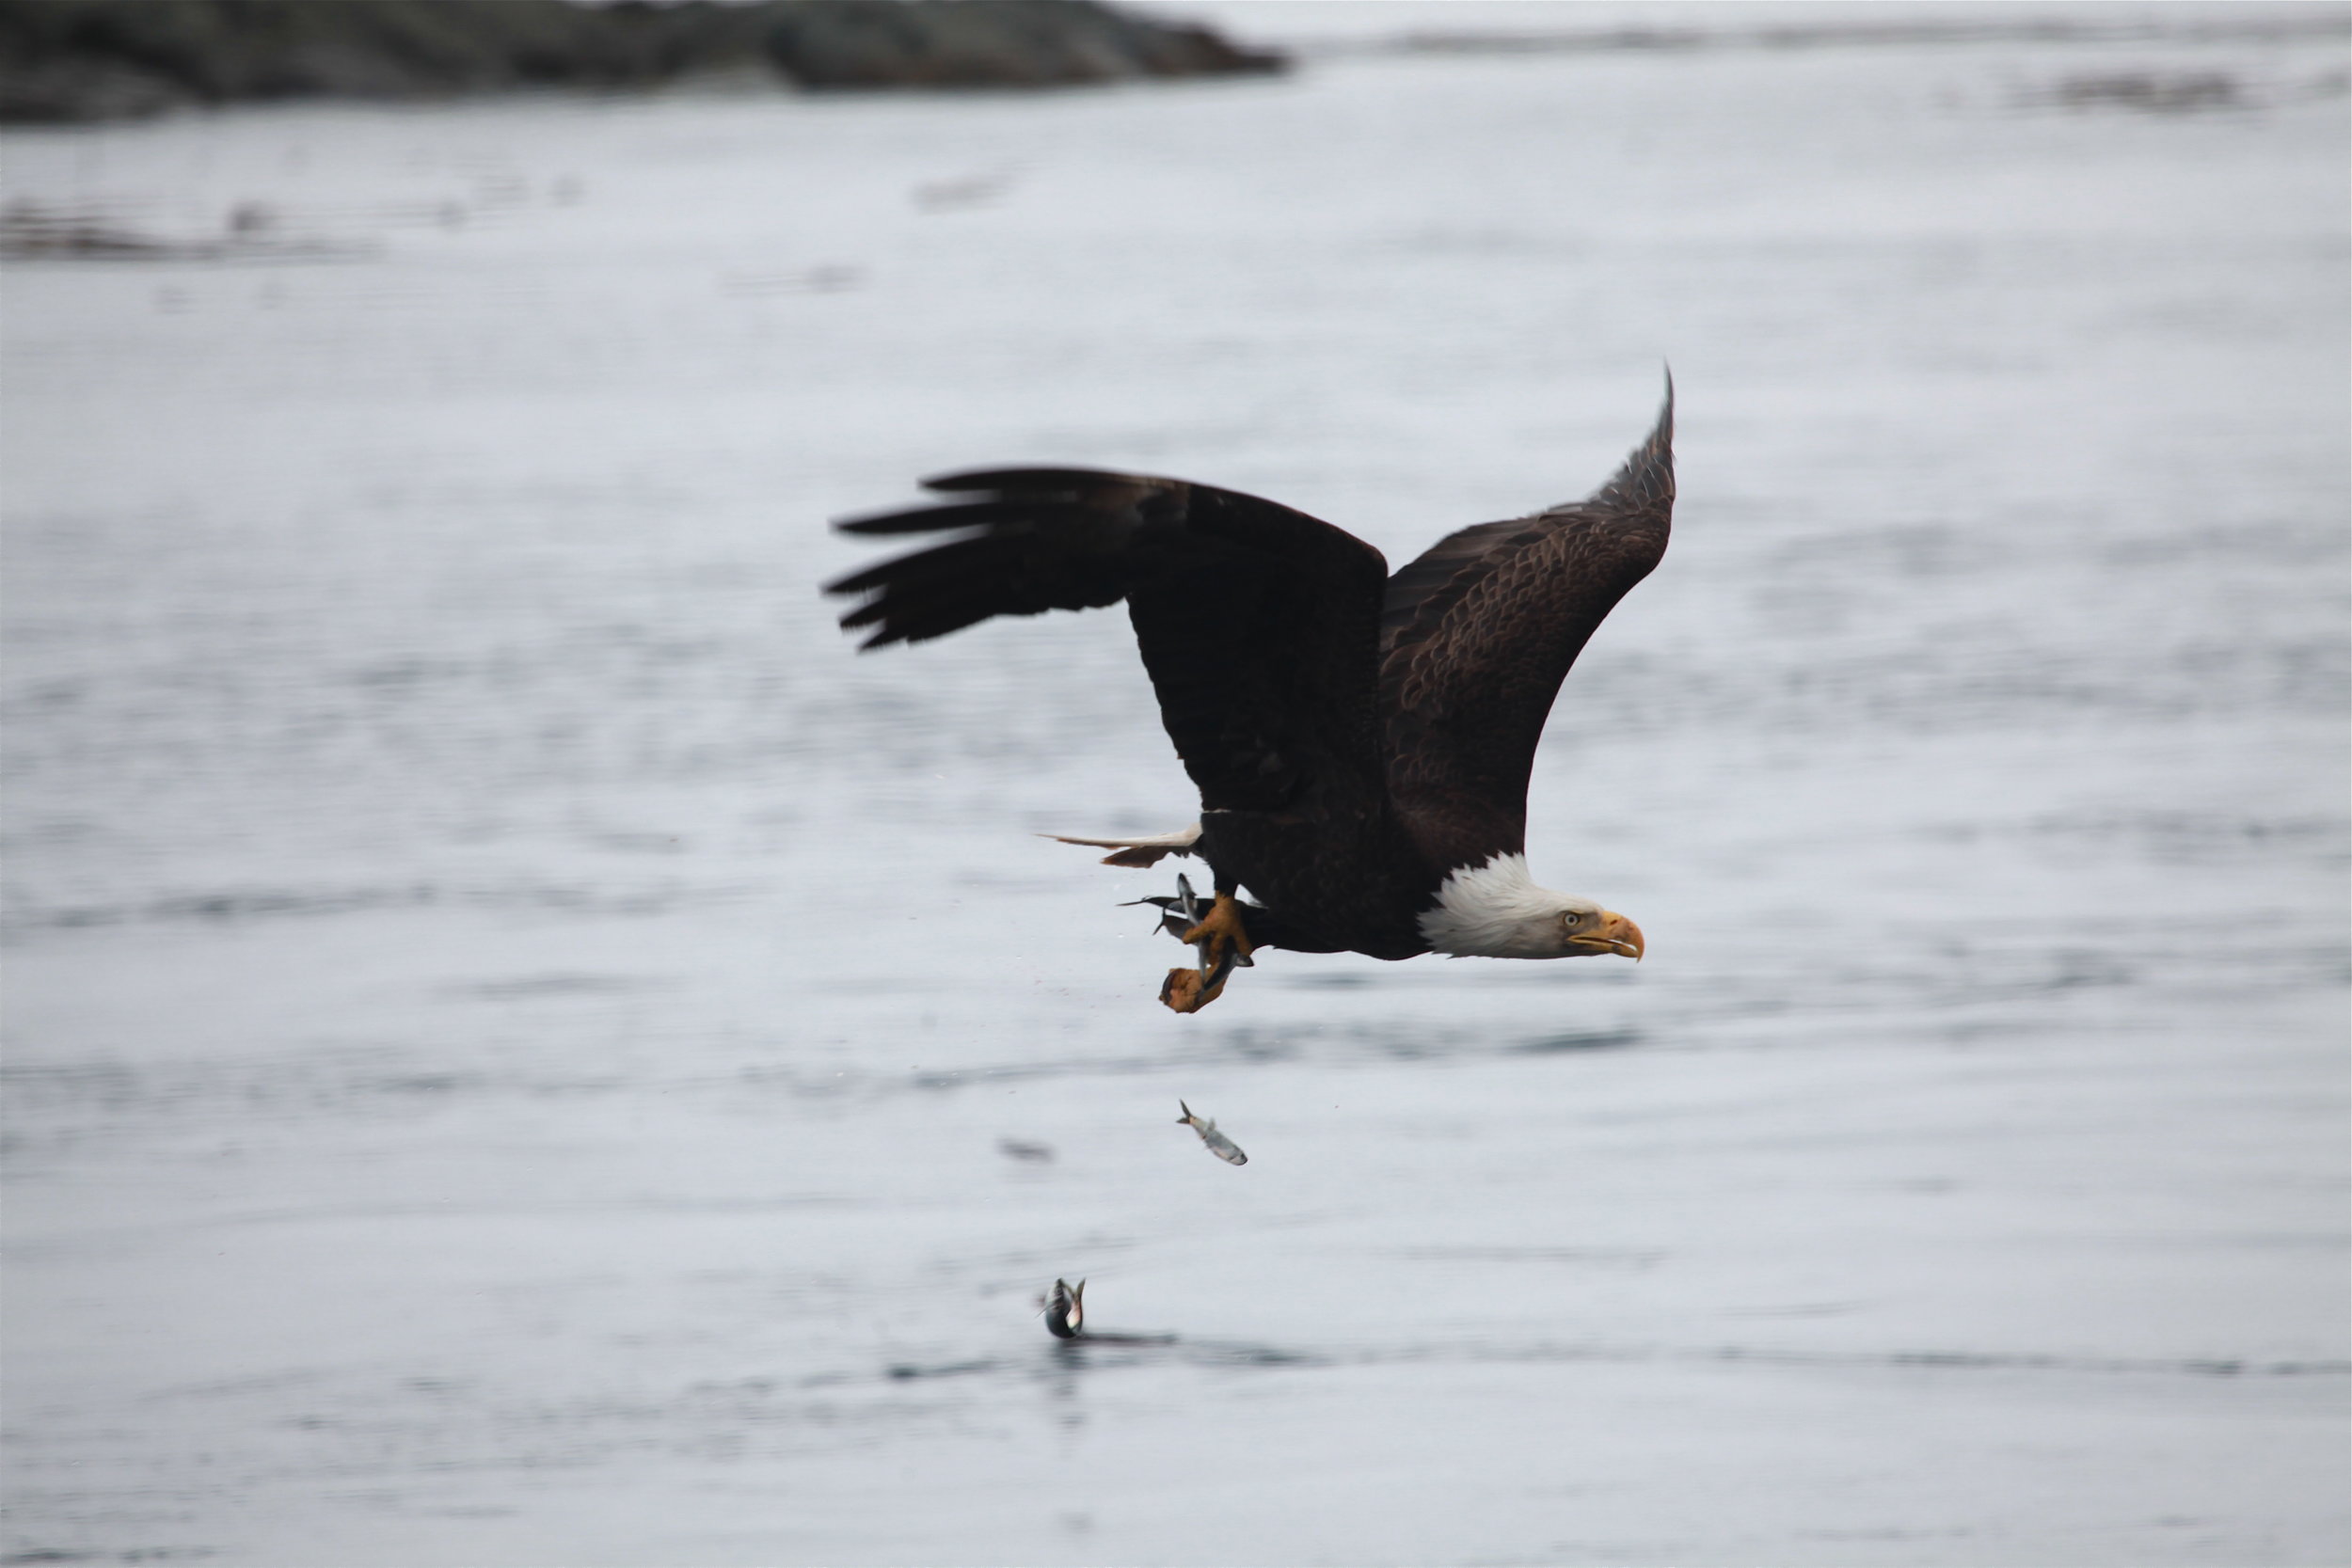 Bald eagle fishing sequence